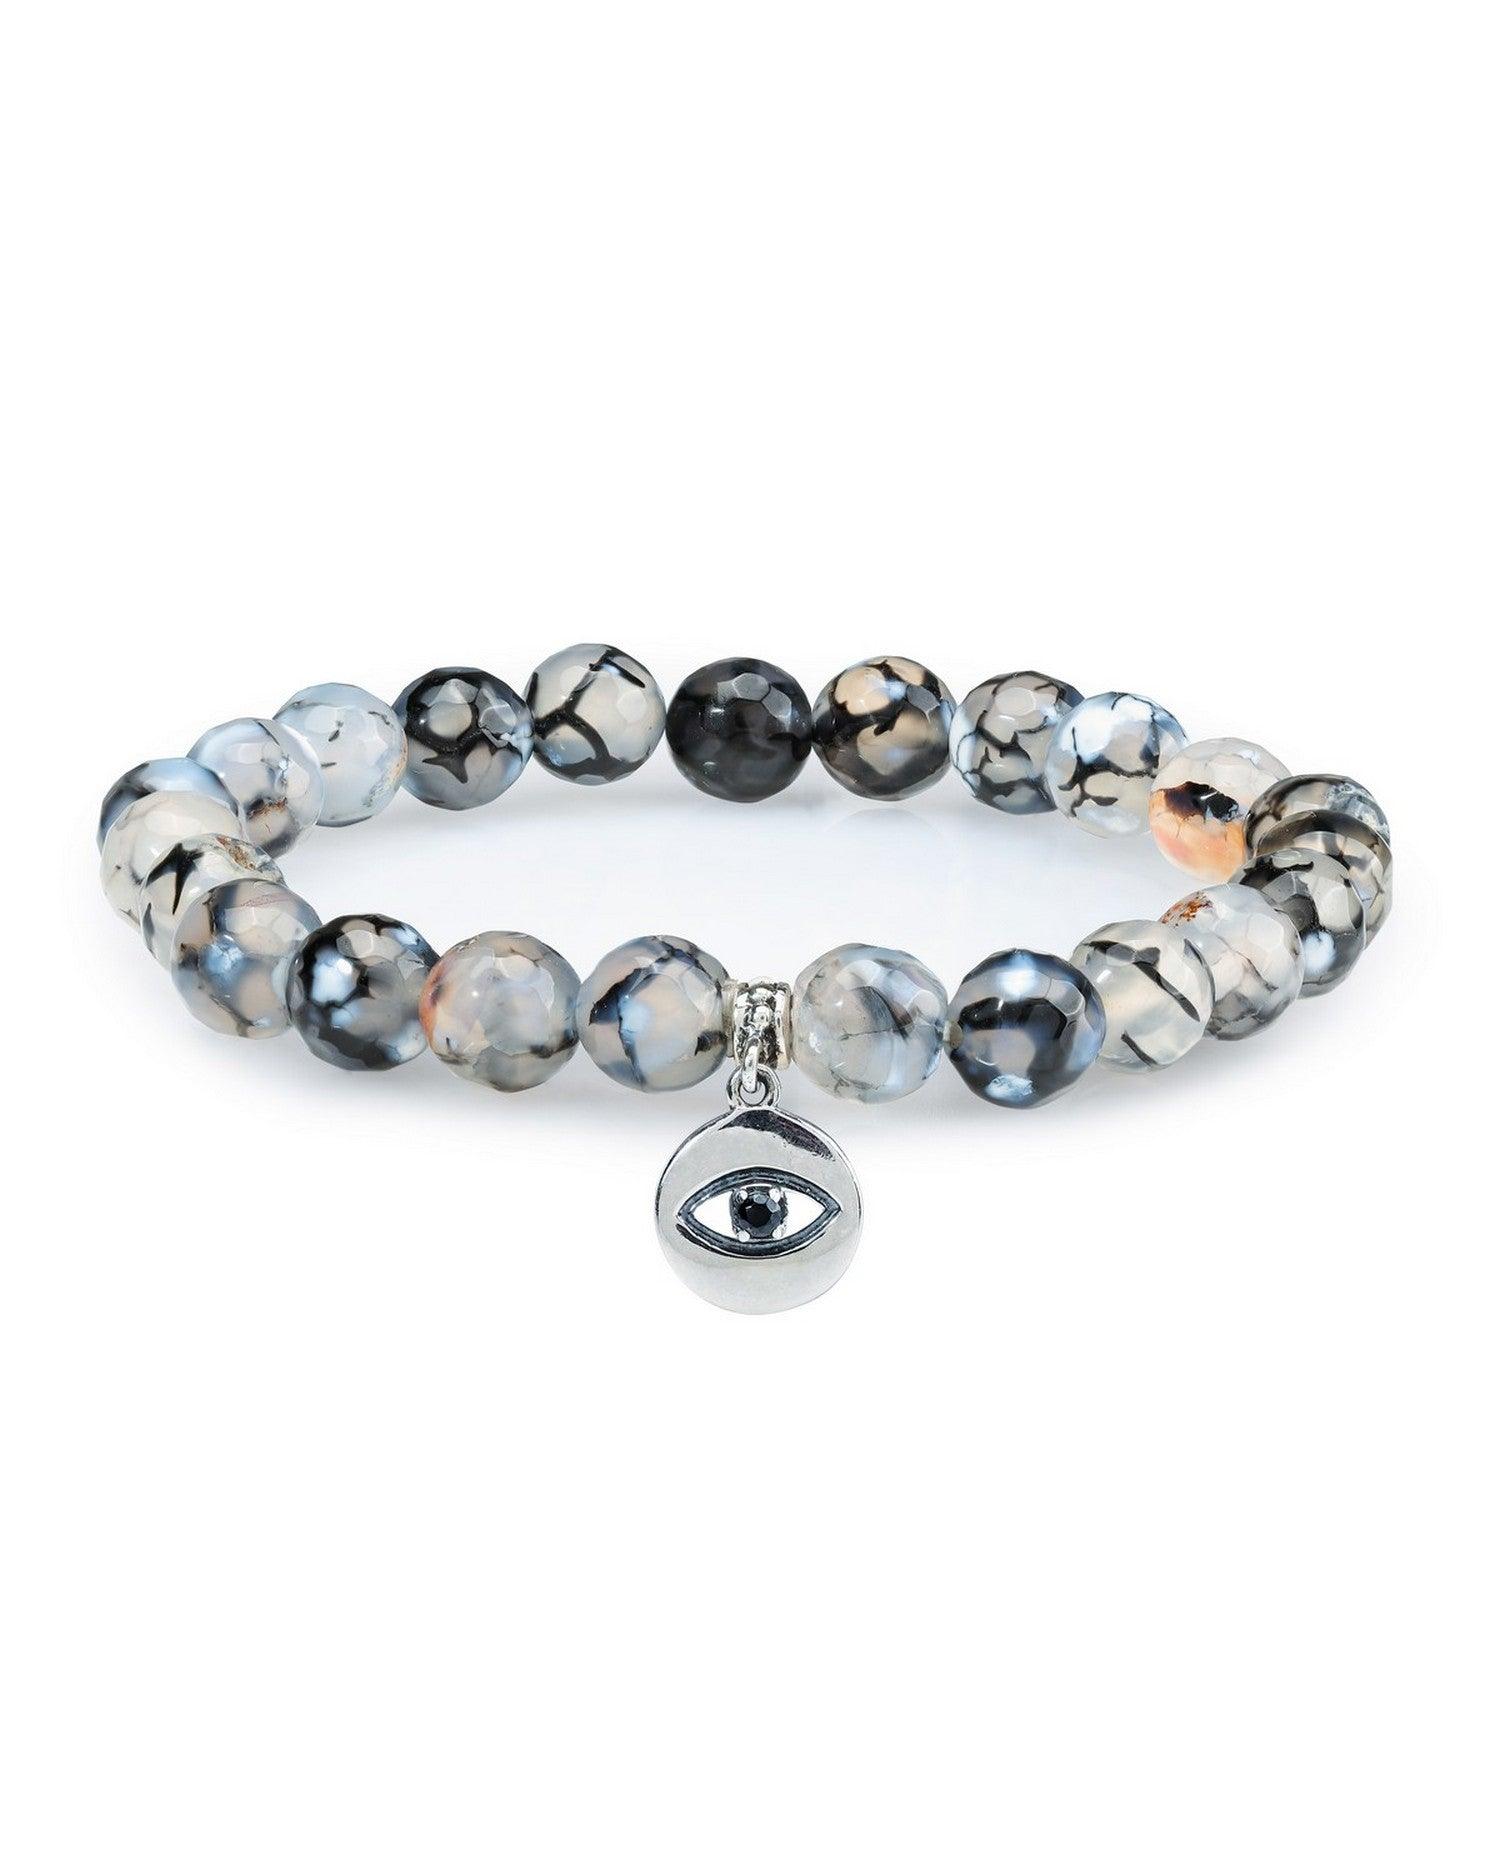 Multi Onyx Bead Black Spinel Stretch Bracelet .925 Sterling Silver Jewelry - YoTreasure